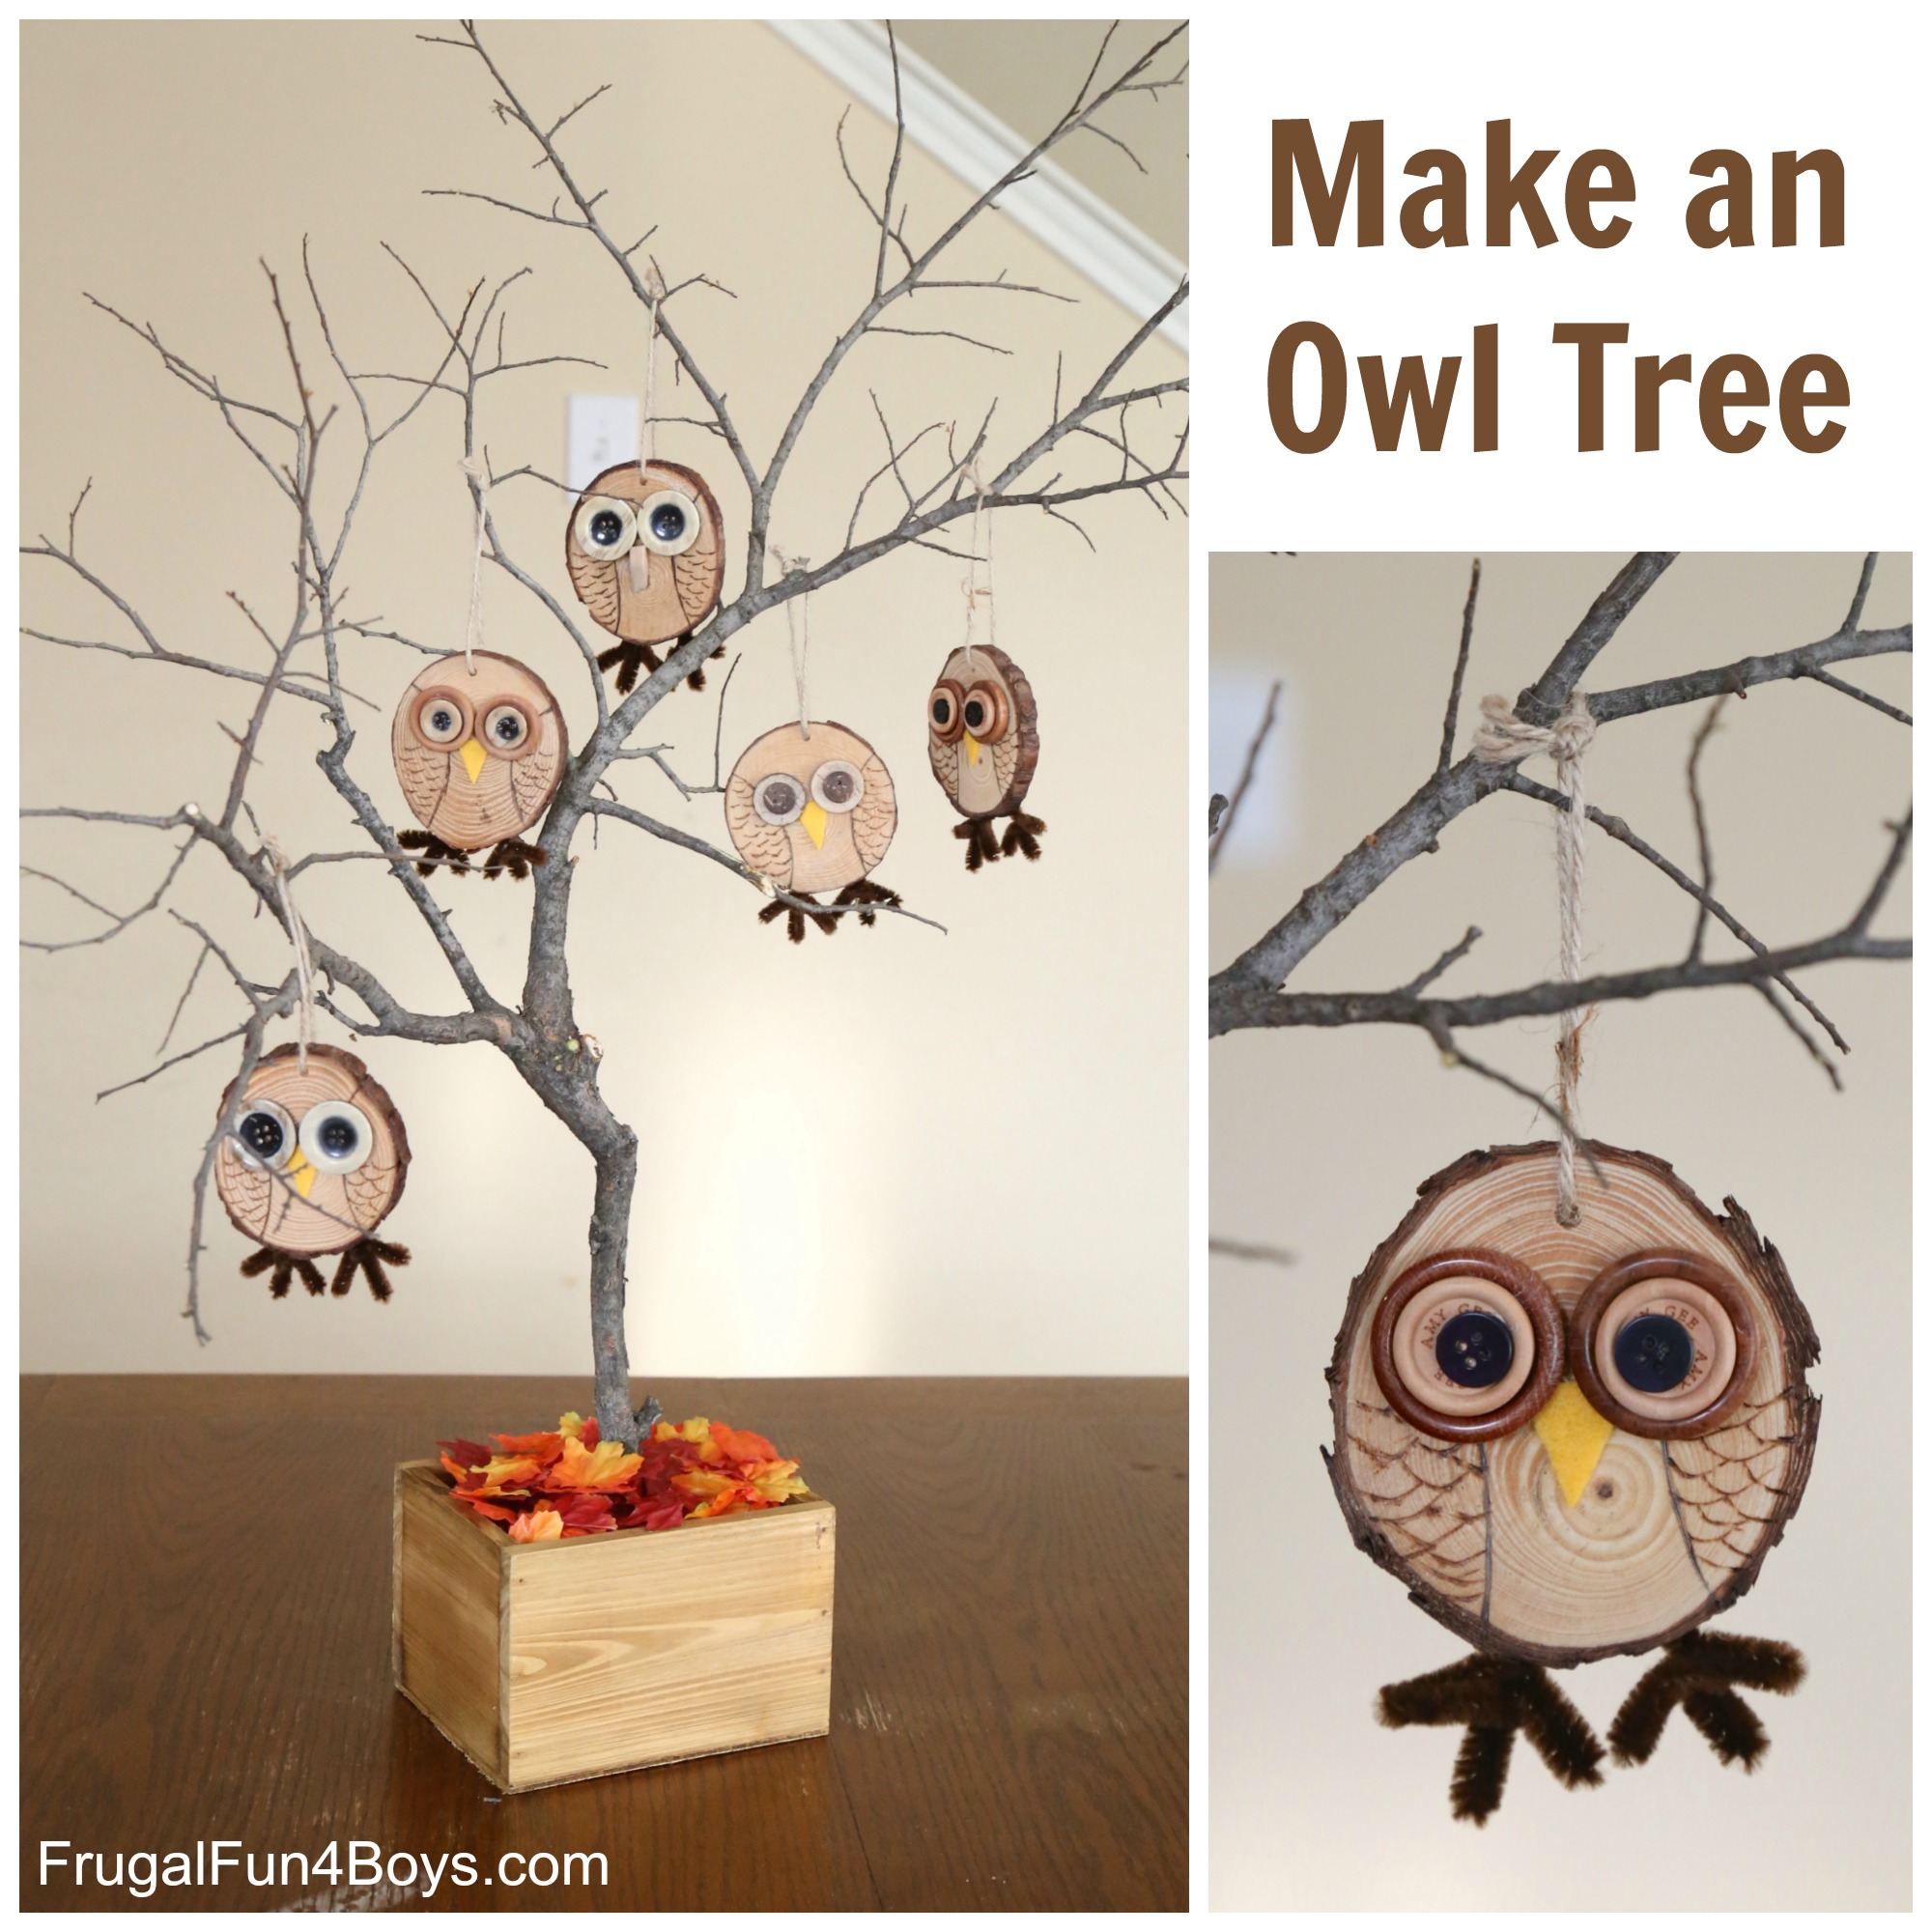 Make an Owl Tree - Wood Slice Owl Ornament Craft